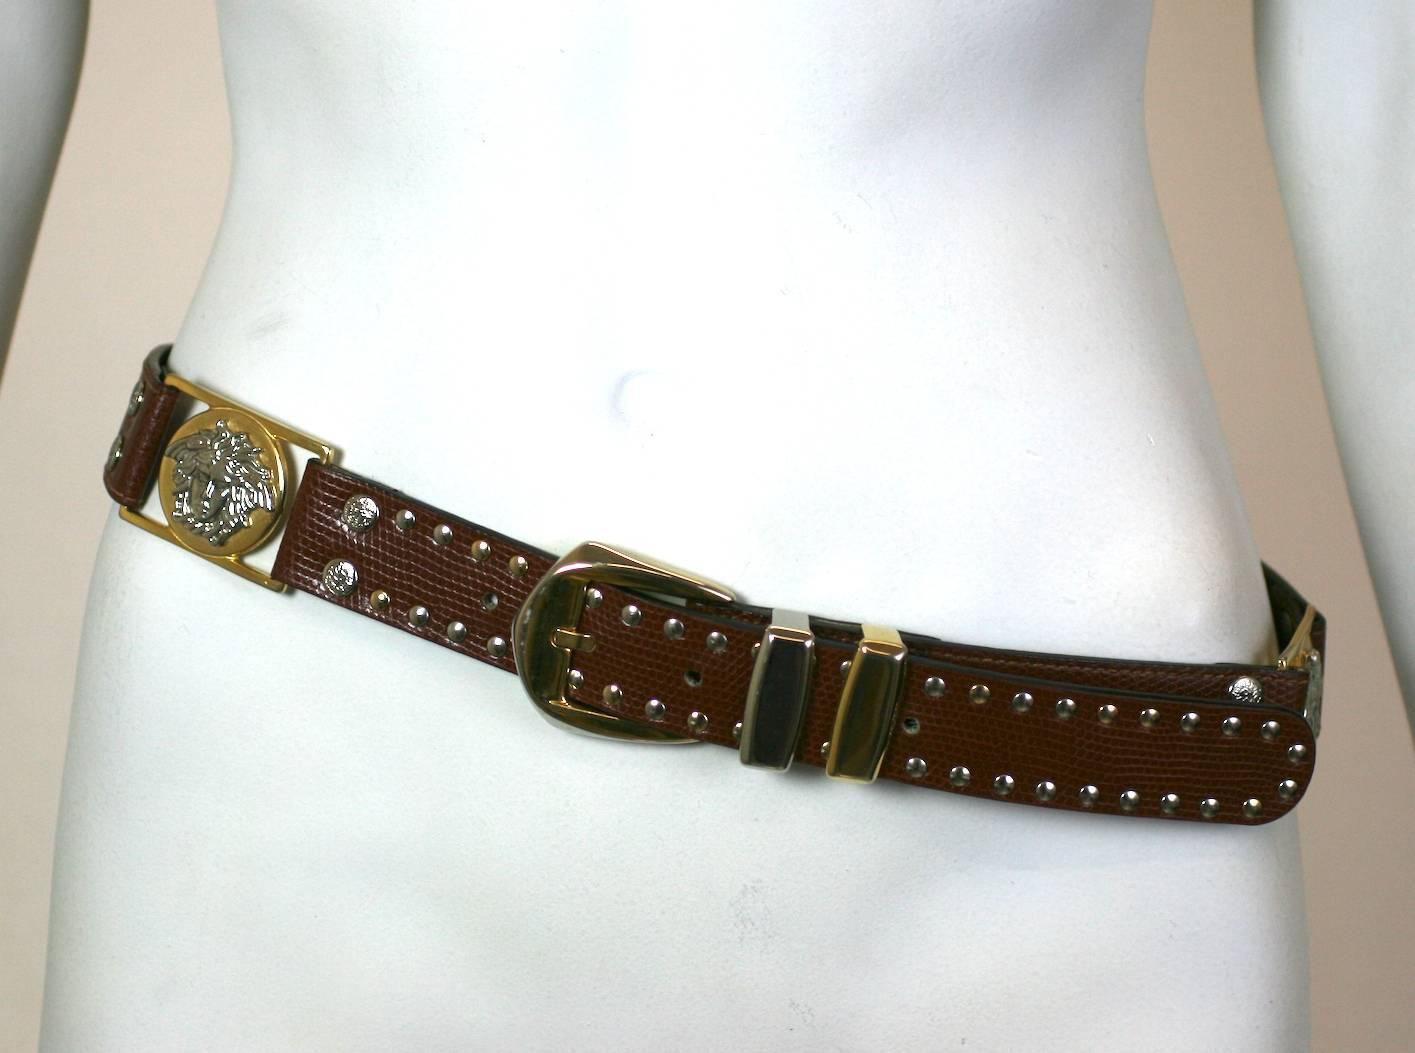 Gianni Versace Studded Medusa Mens Belt For Sale at 1stdibs